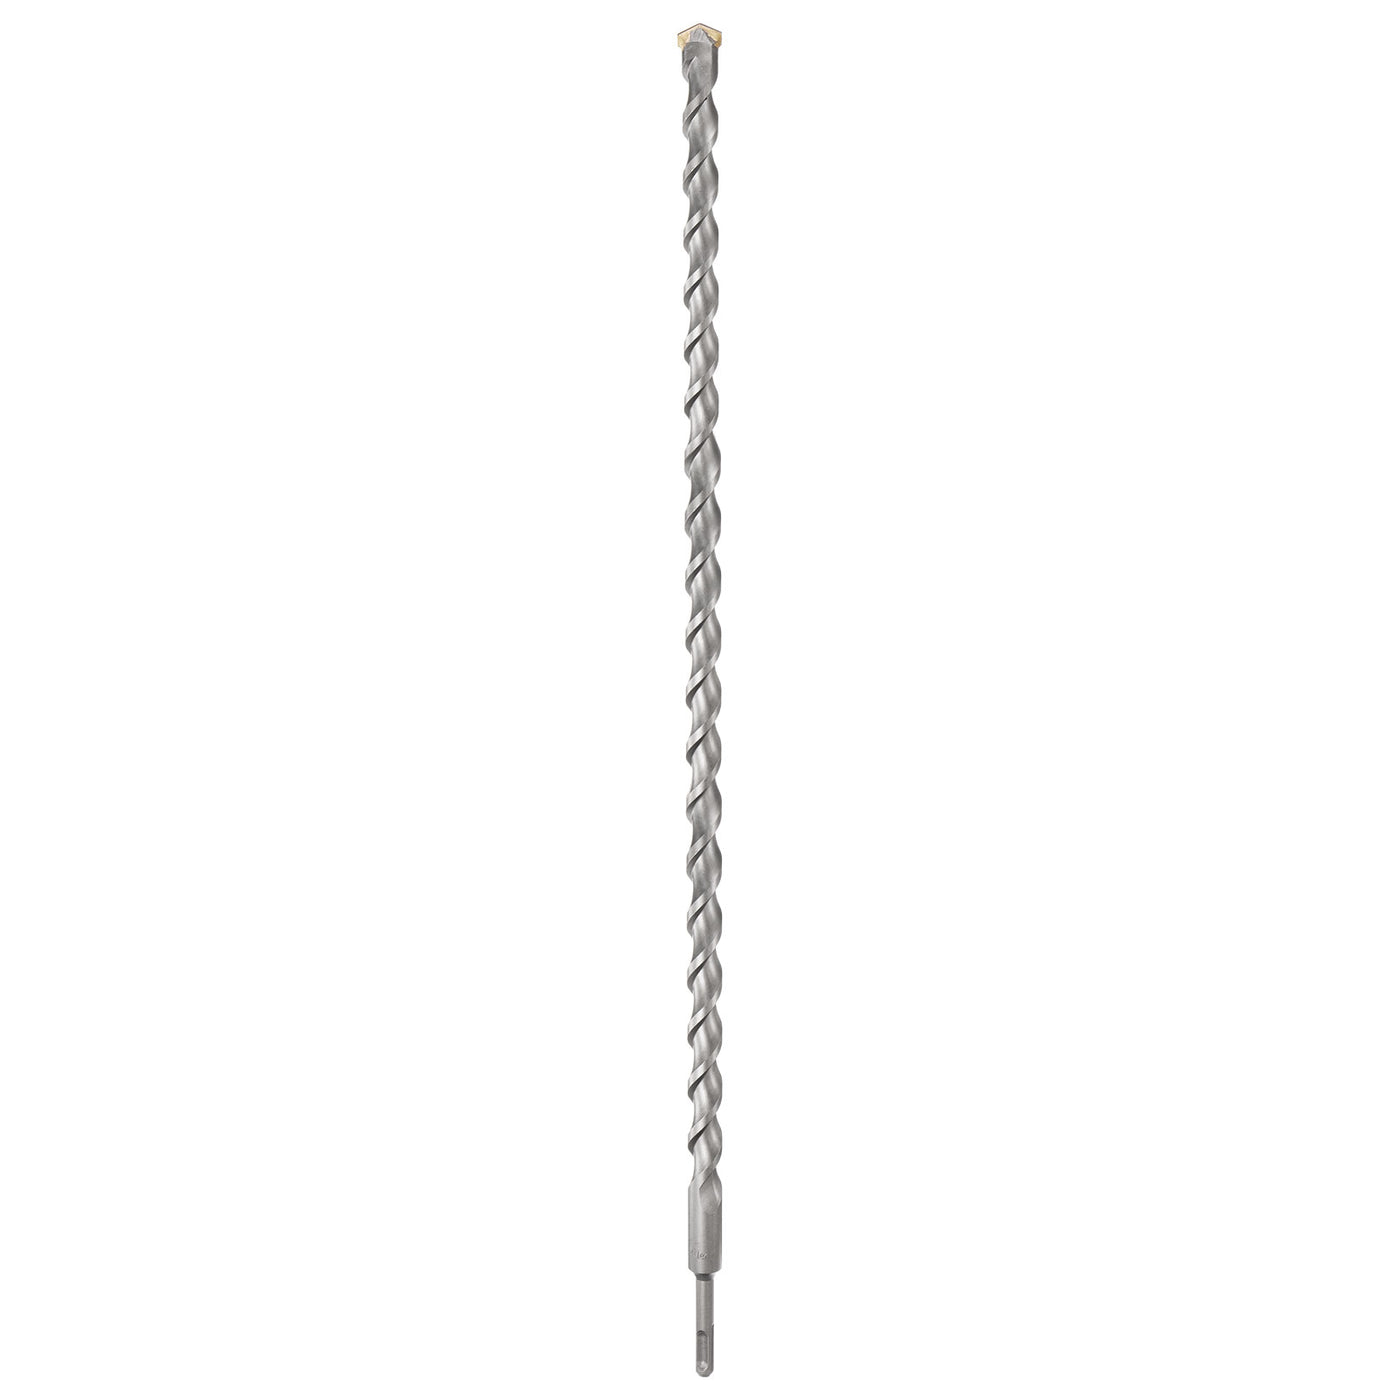 Harfington 22mm x 700mm Carbide Tip SDS-Plus Rotary Hammer Drill Bit for Masonry Concrete